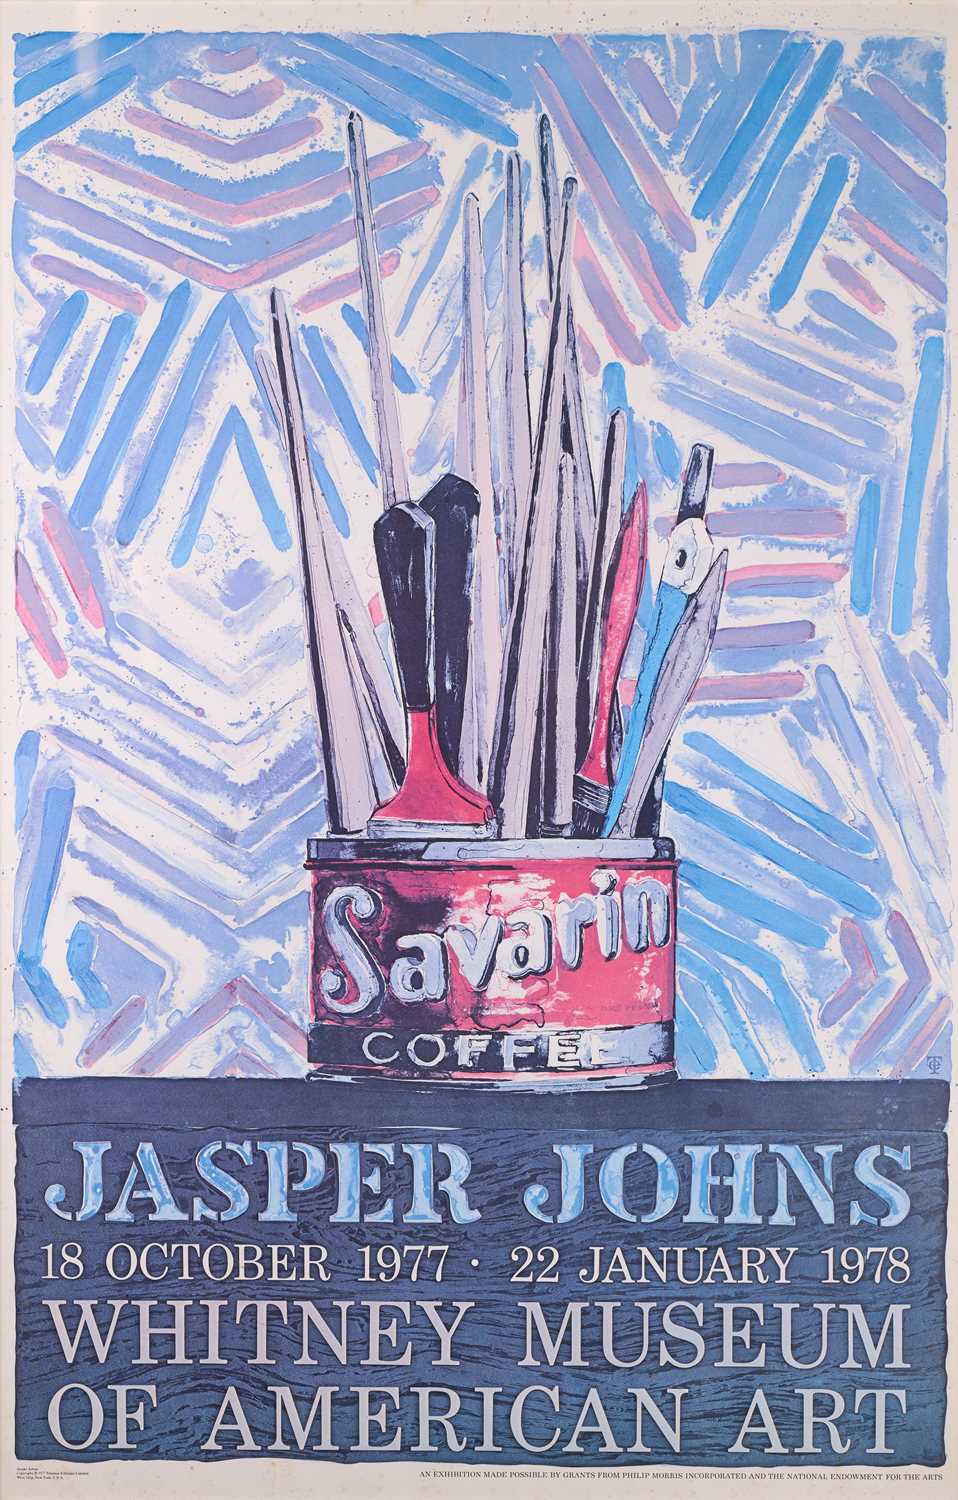 Lot 310 - Jasper Johns (b.1930) American "Savarin Poster"...